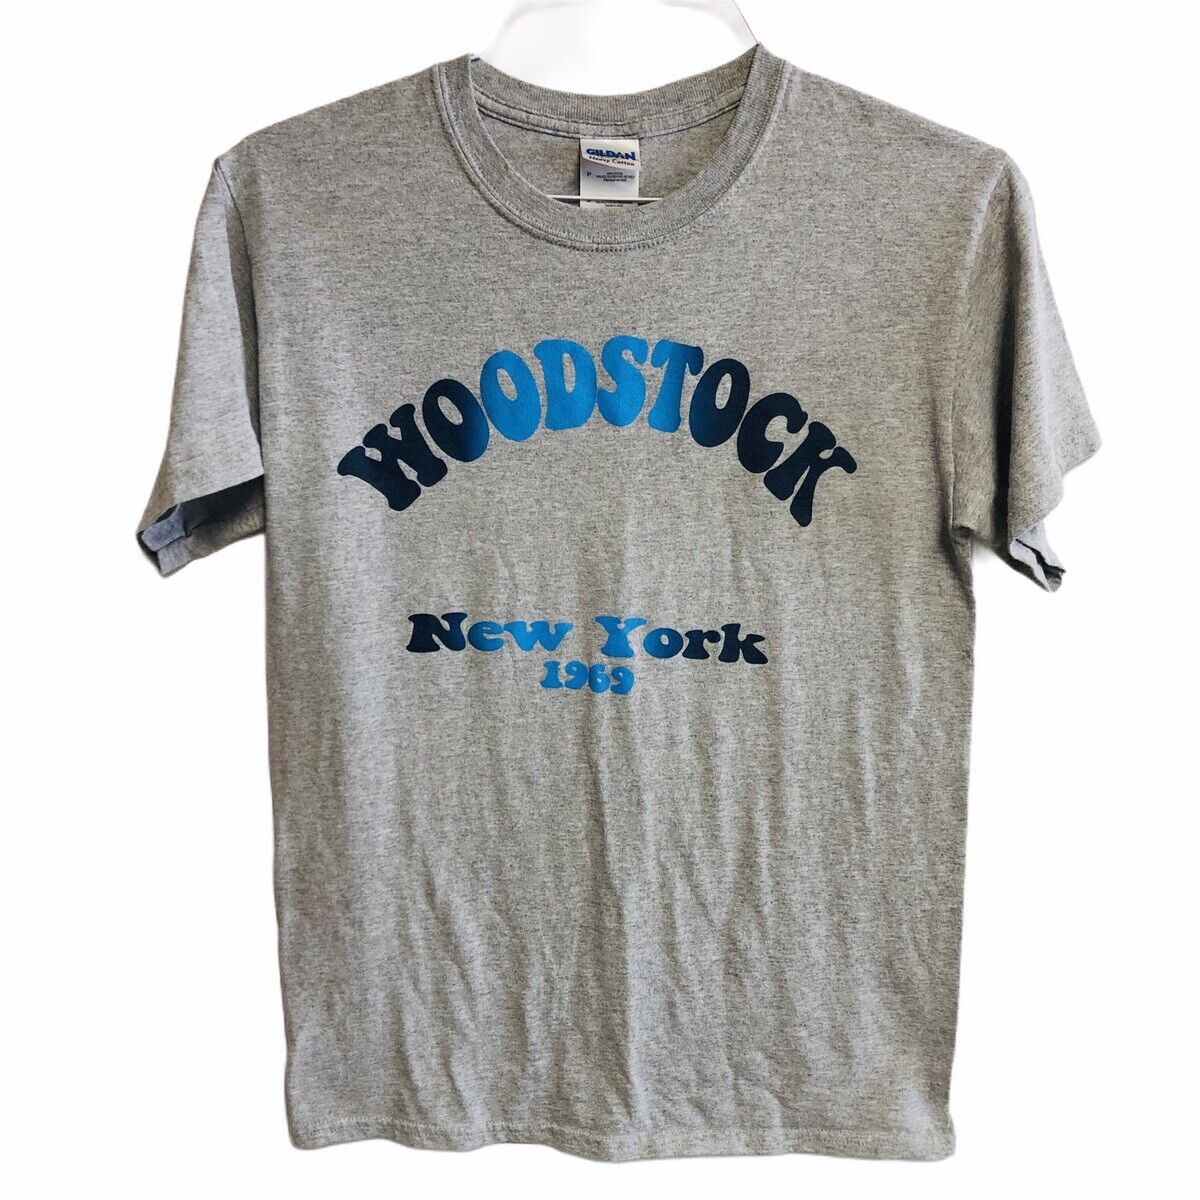 Woodstock New York 1969 Tee Shirt Size Small T9